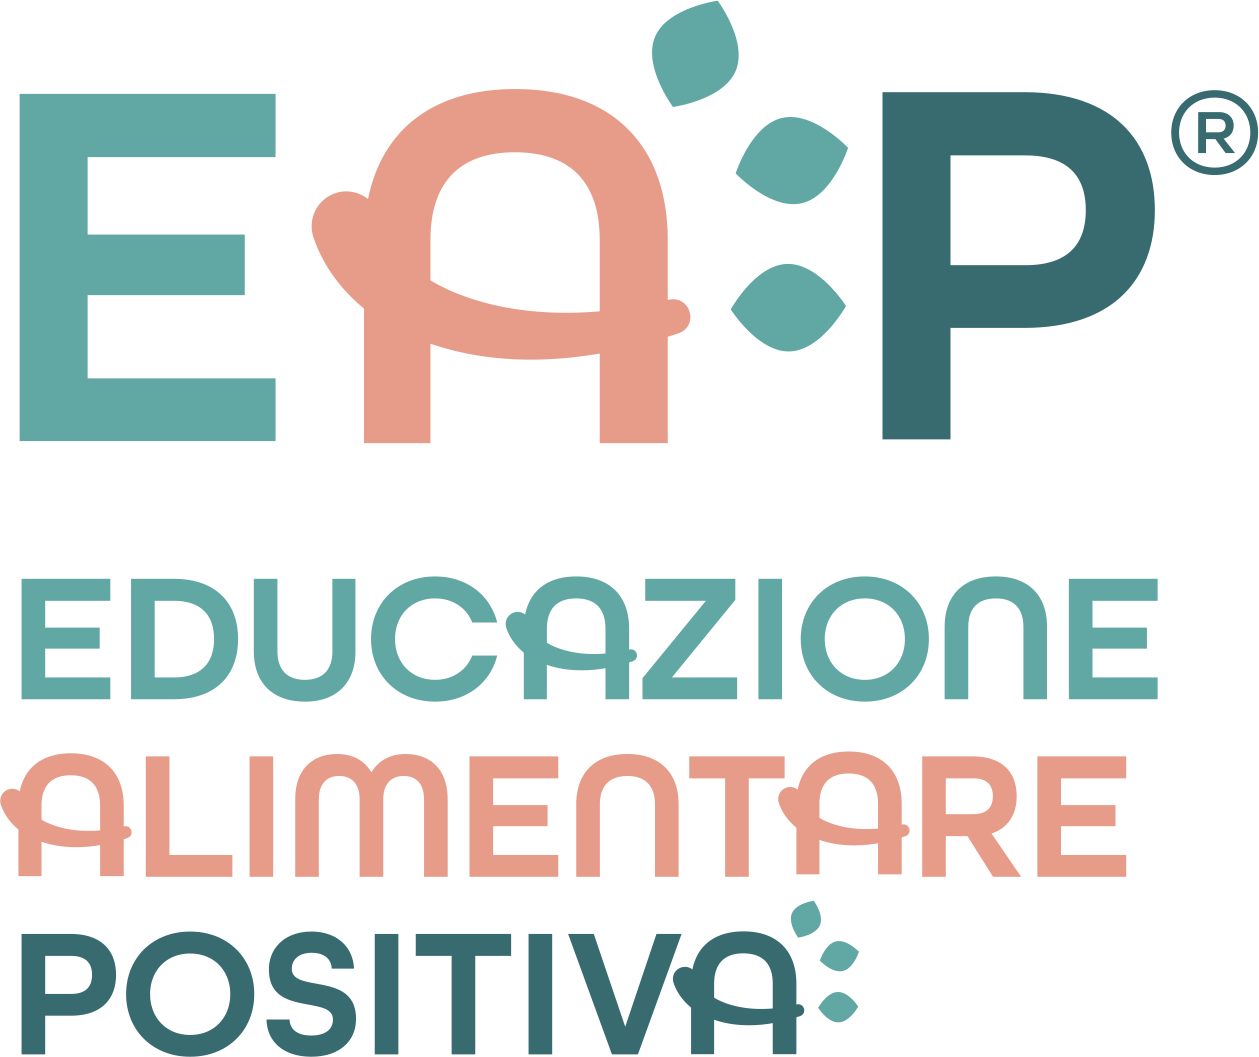 Educazione Alimentare Positiva logo con sigla EAP